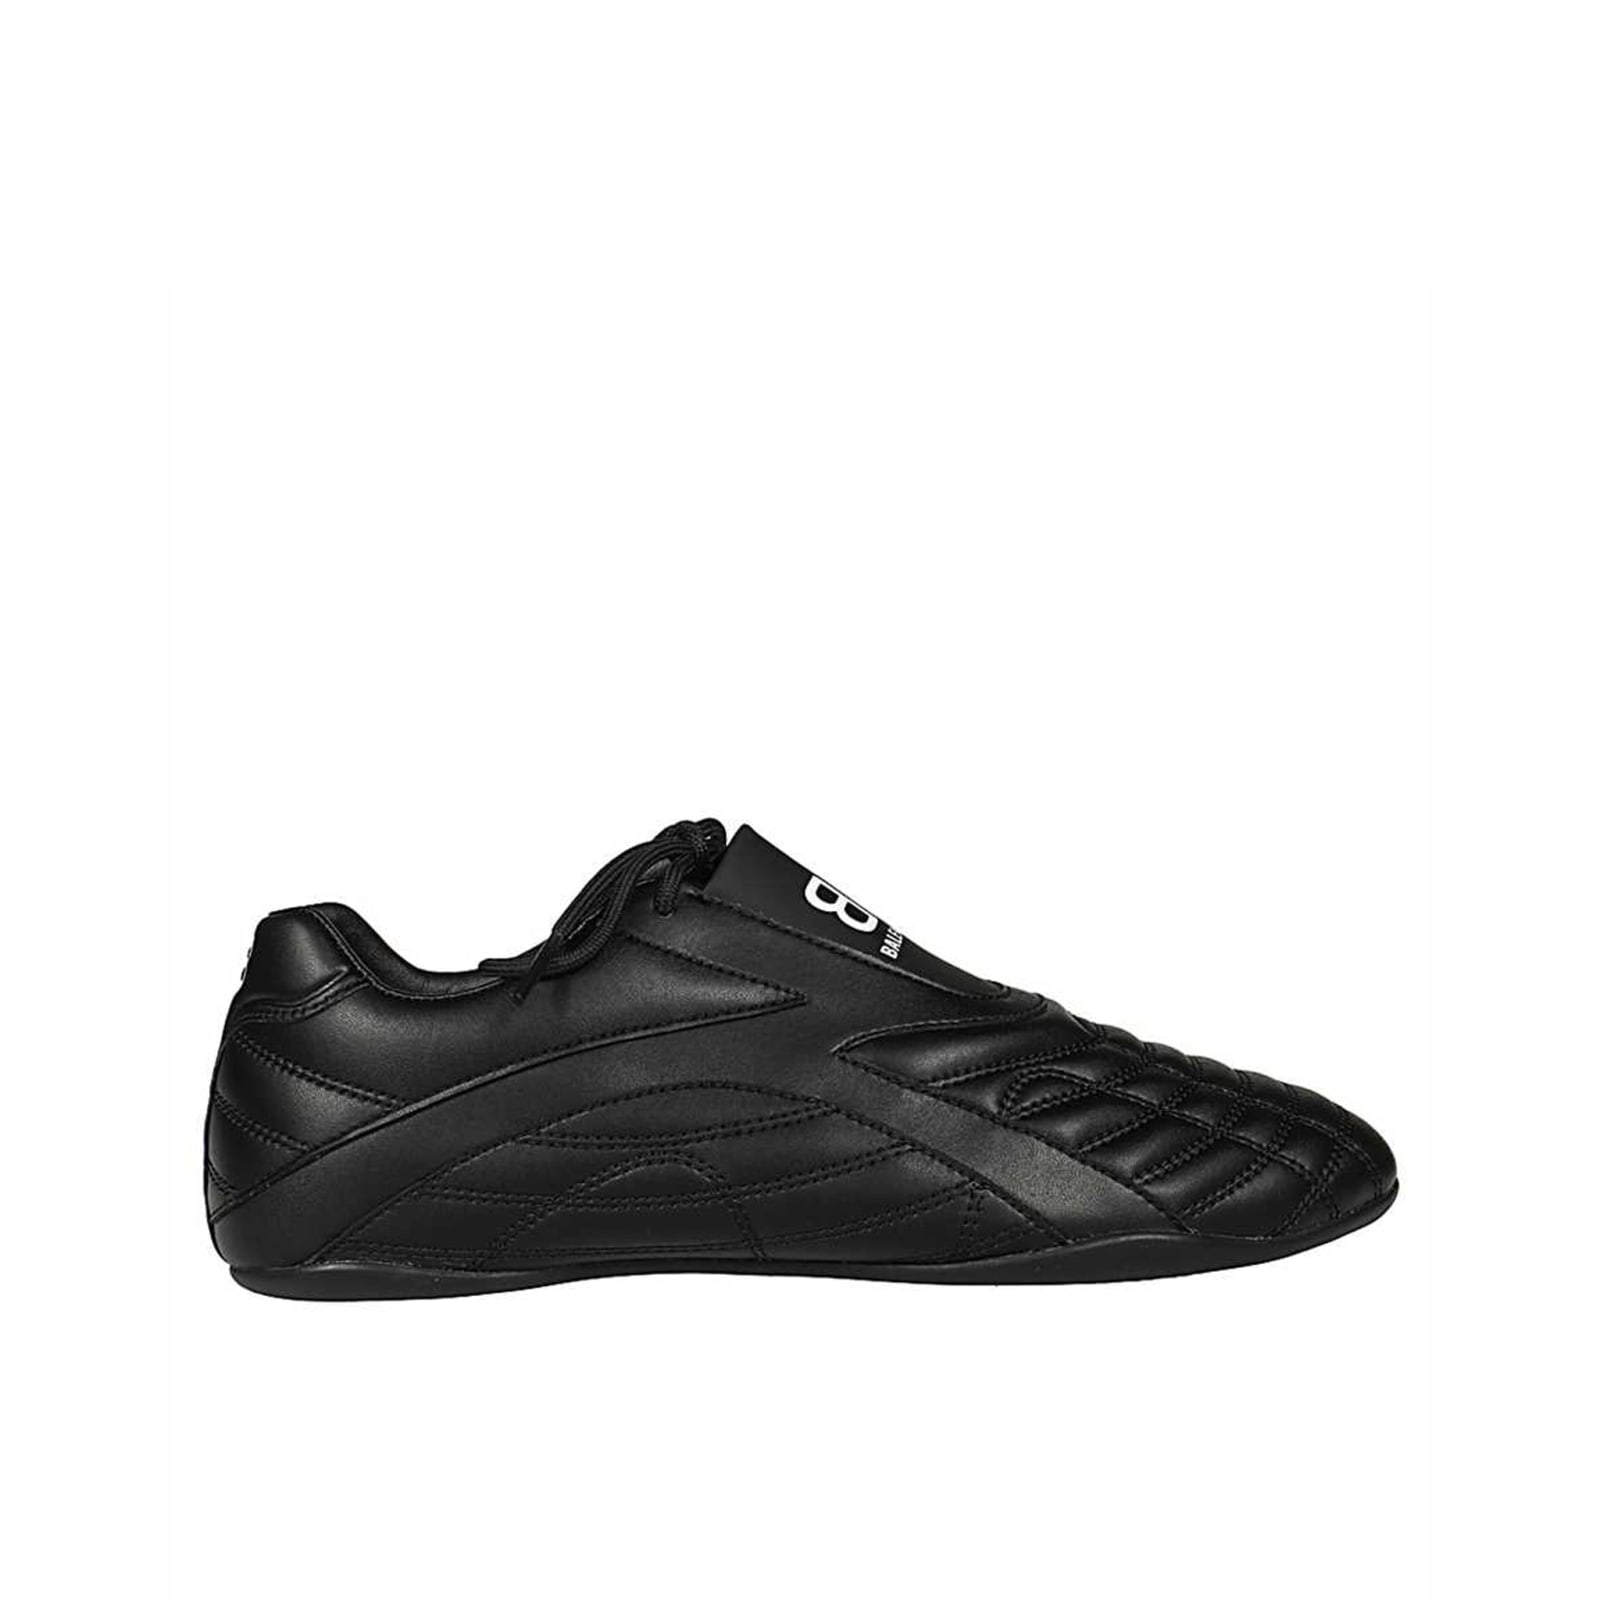 Balenciaga Zen Leather Sneakers